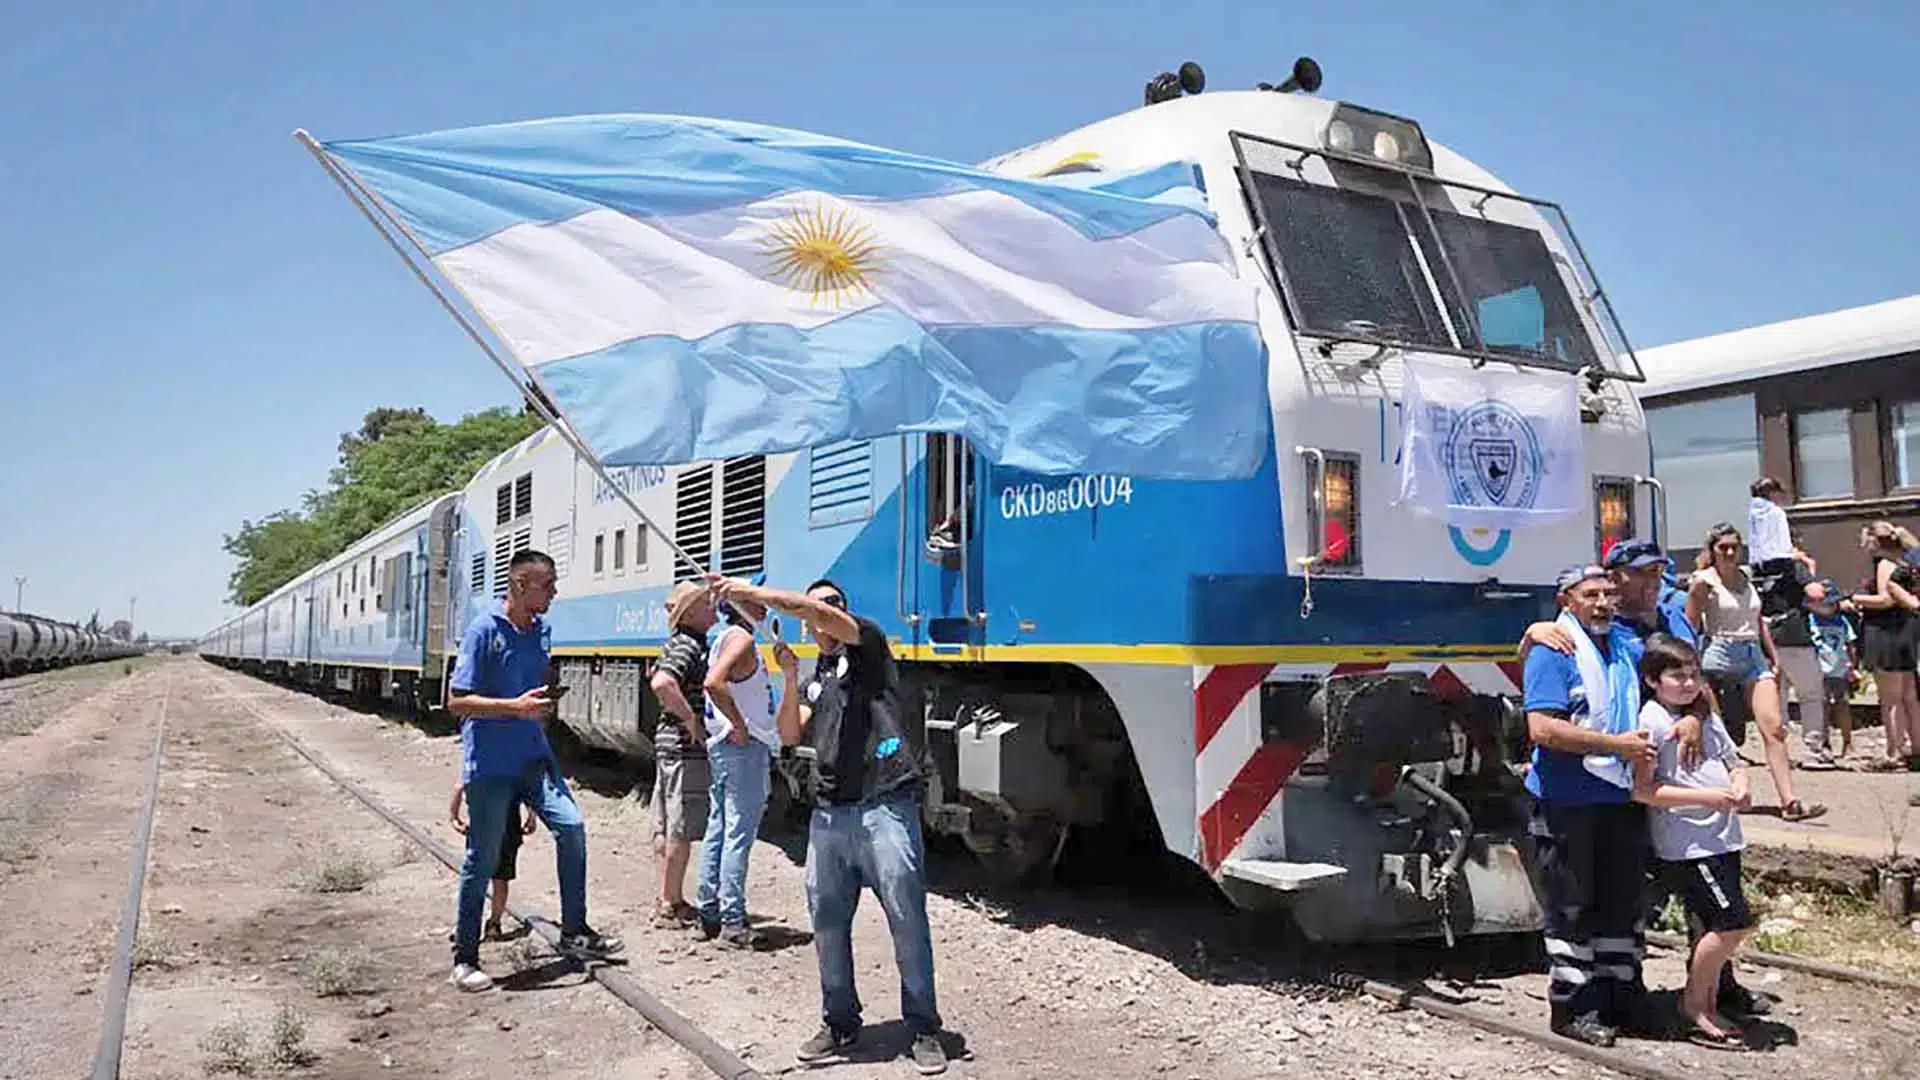 ferrocarriles argentinos bandera argentina - Quién es el dueño del ferrocarril argentino